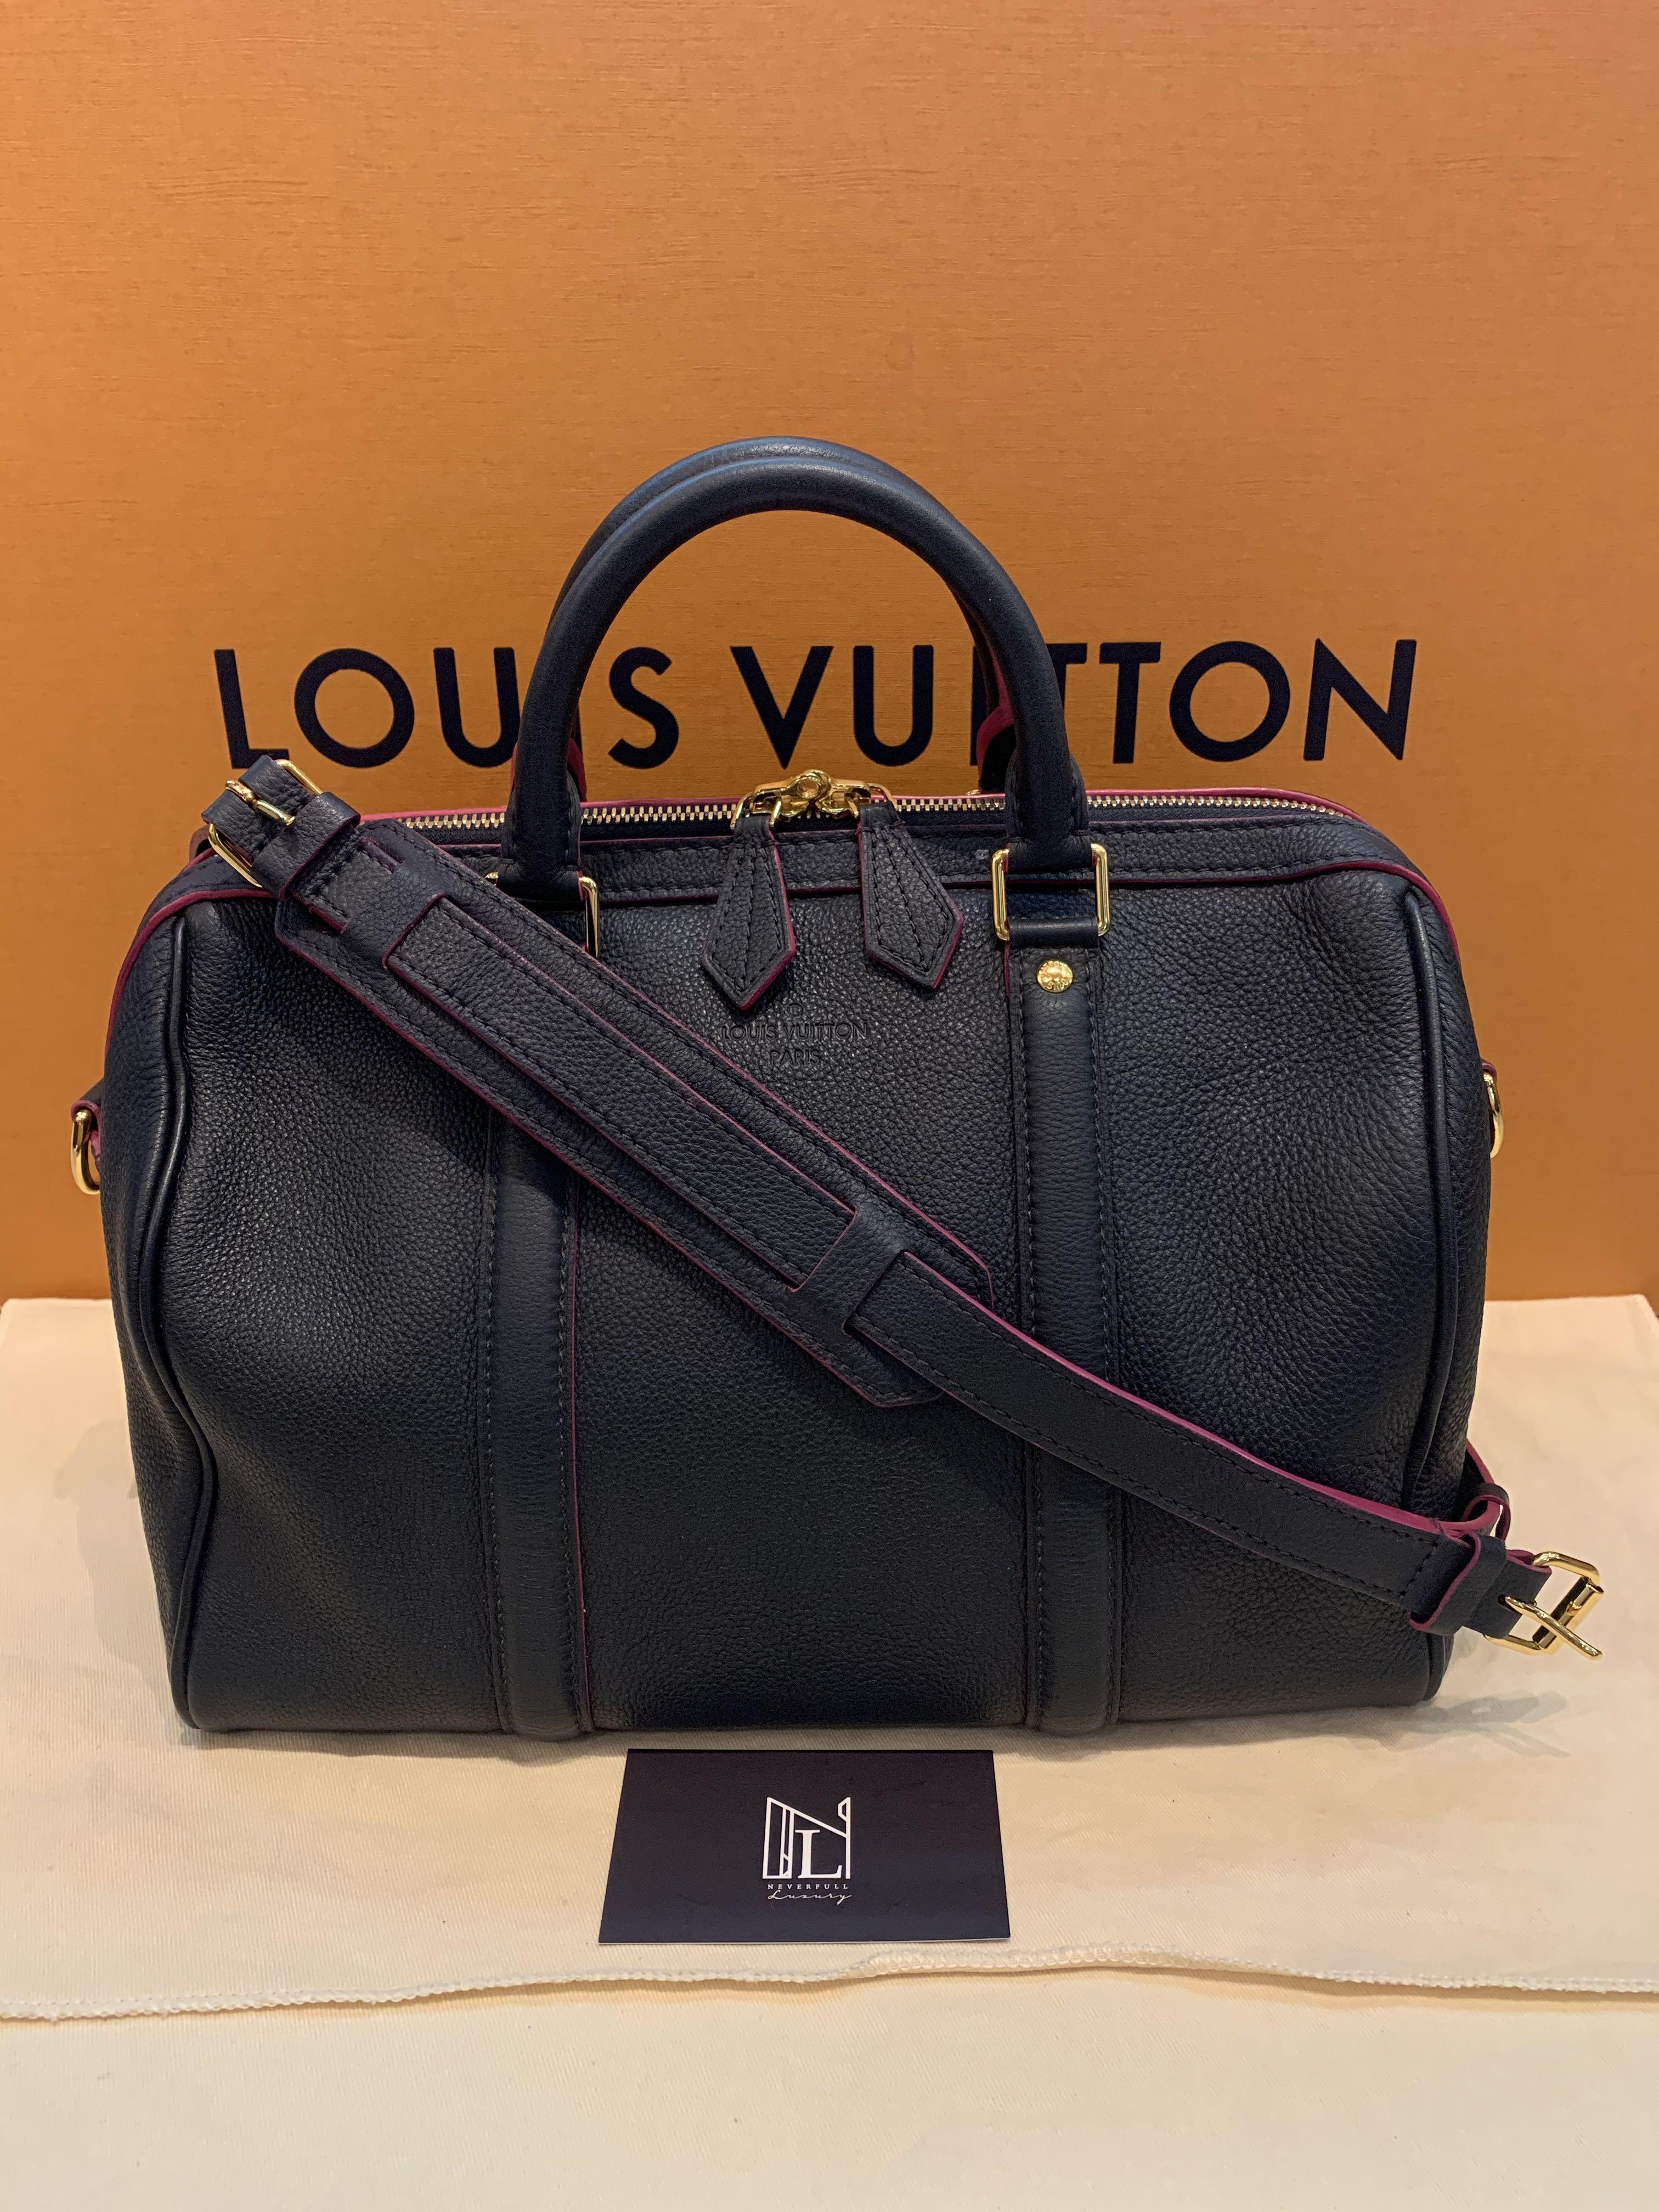 Louis Vuitton Sofia Coppola Bag in Galet